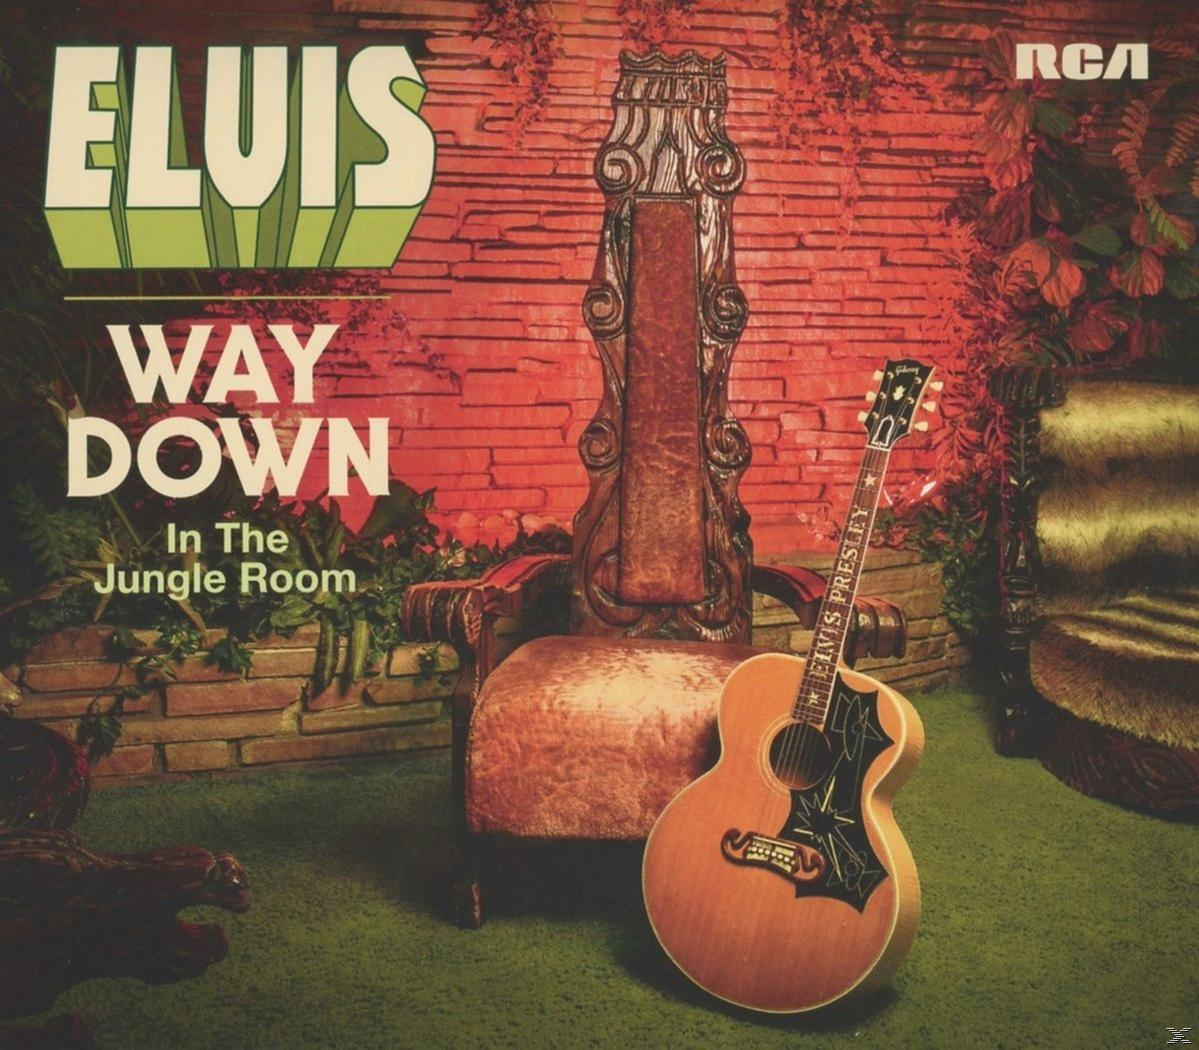 Elvis Presley Jungle - - Room Down (CD) the Way in